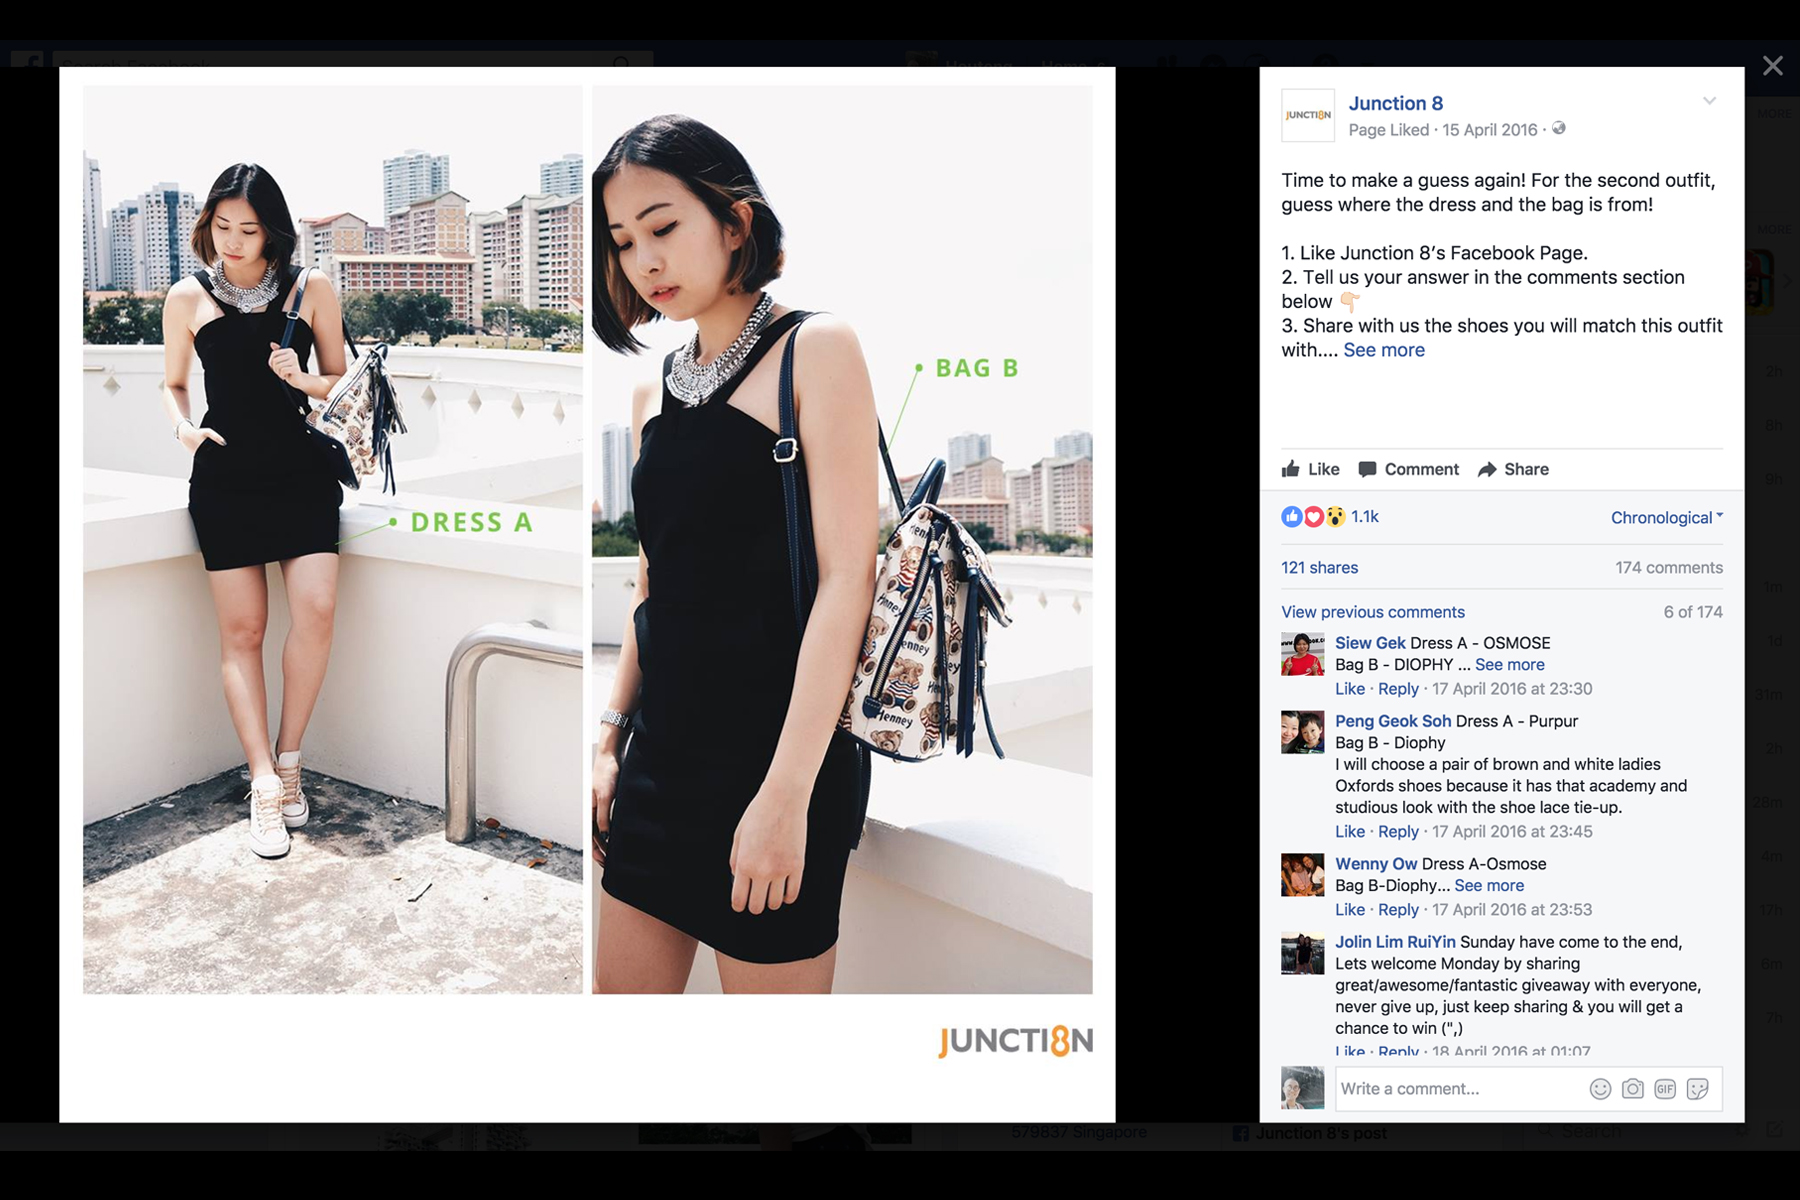 Design and Digital Marketing - Junction 8 Fashion Week 2016 - Facebook Post 2 - Leow Hou Teng